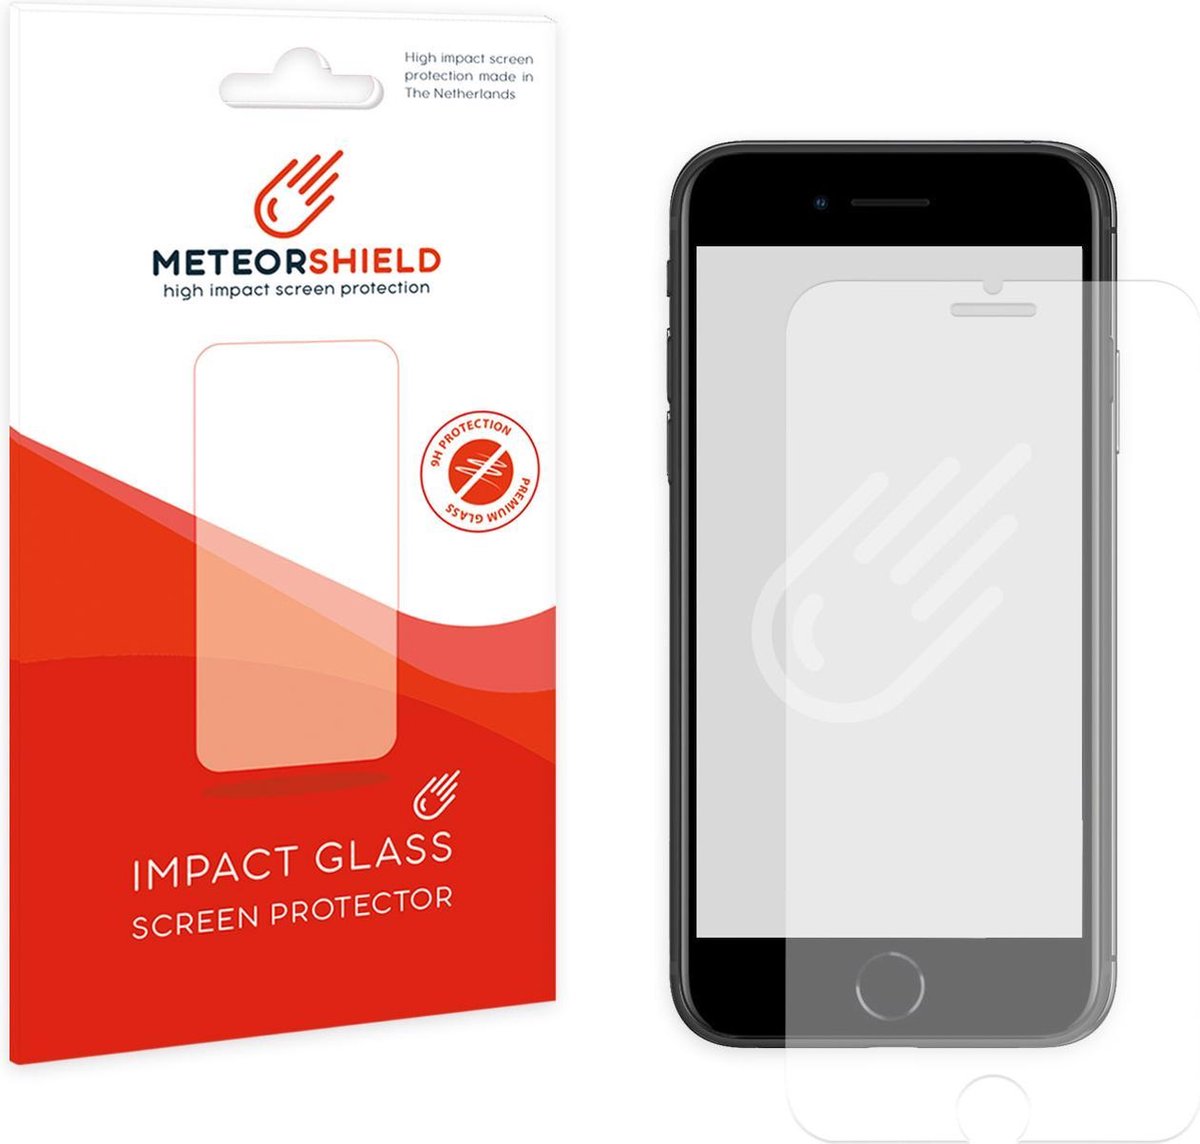 Meteorshield iPhone 8 screenprotector - Ultra clear impact glass